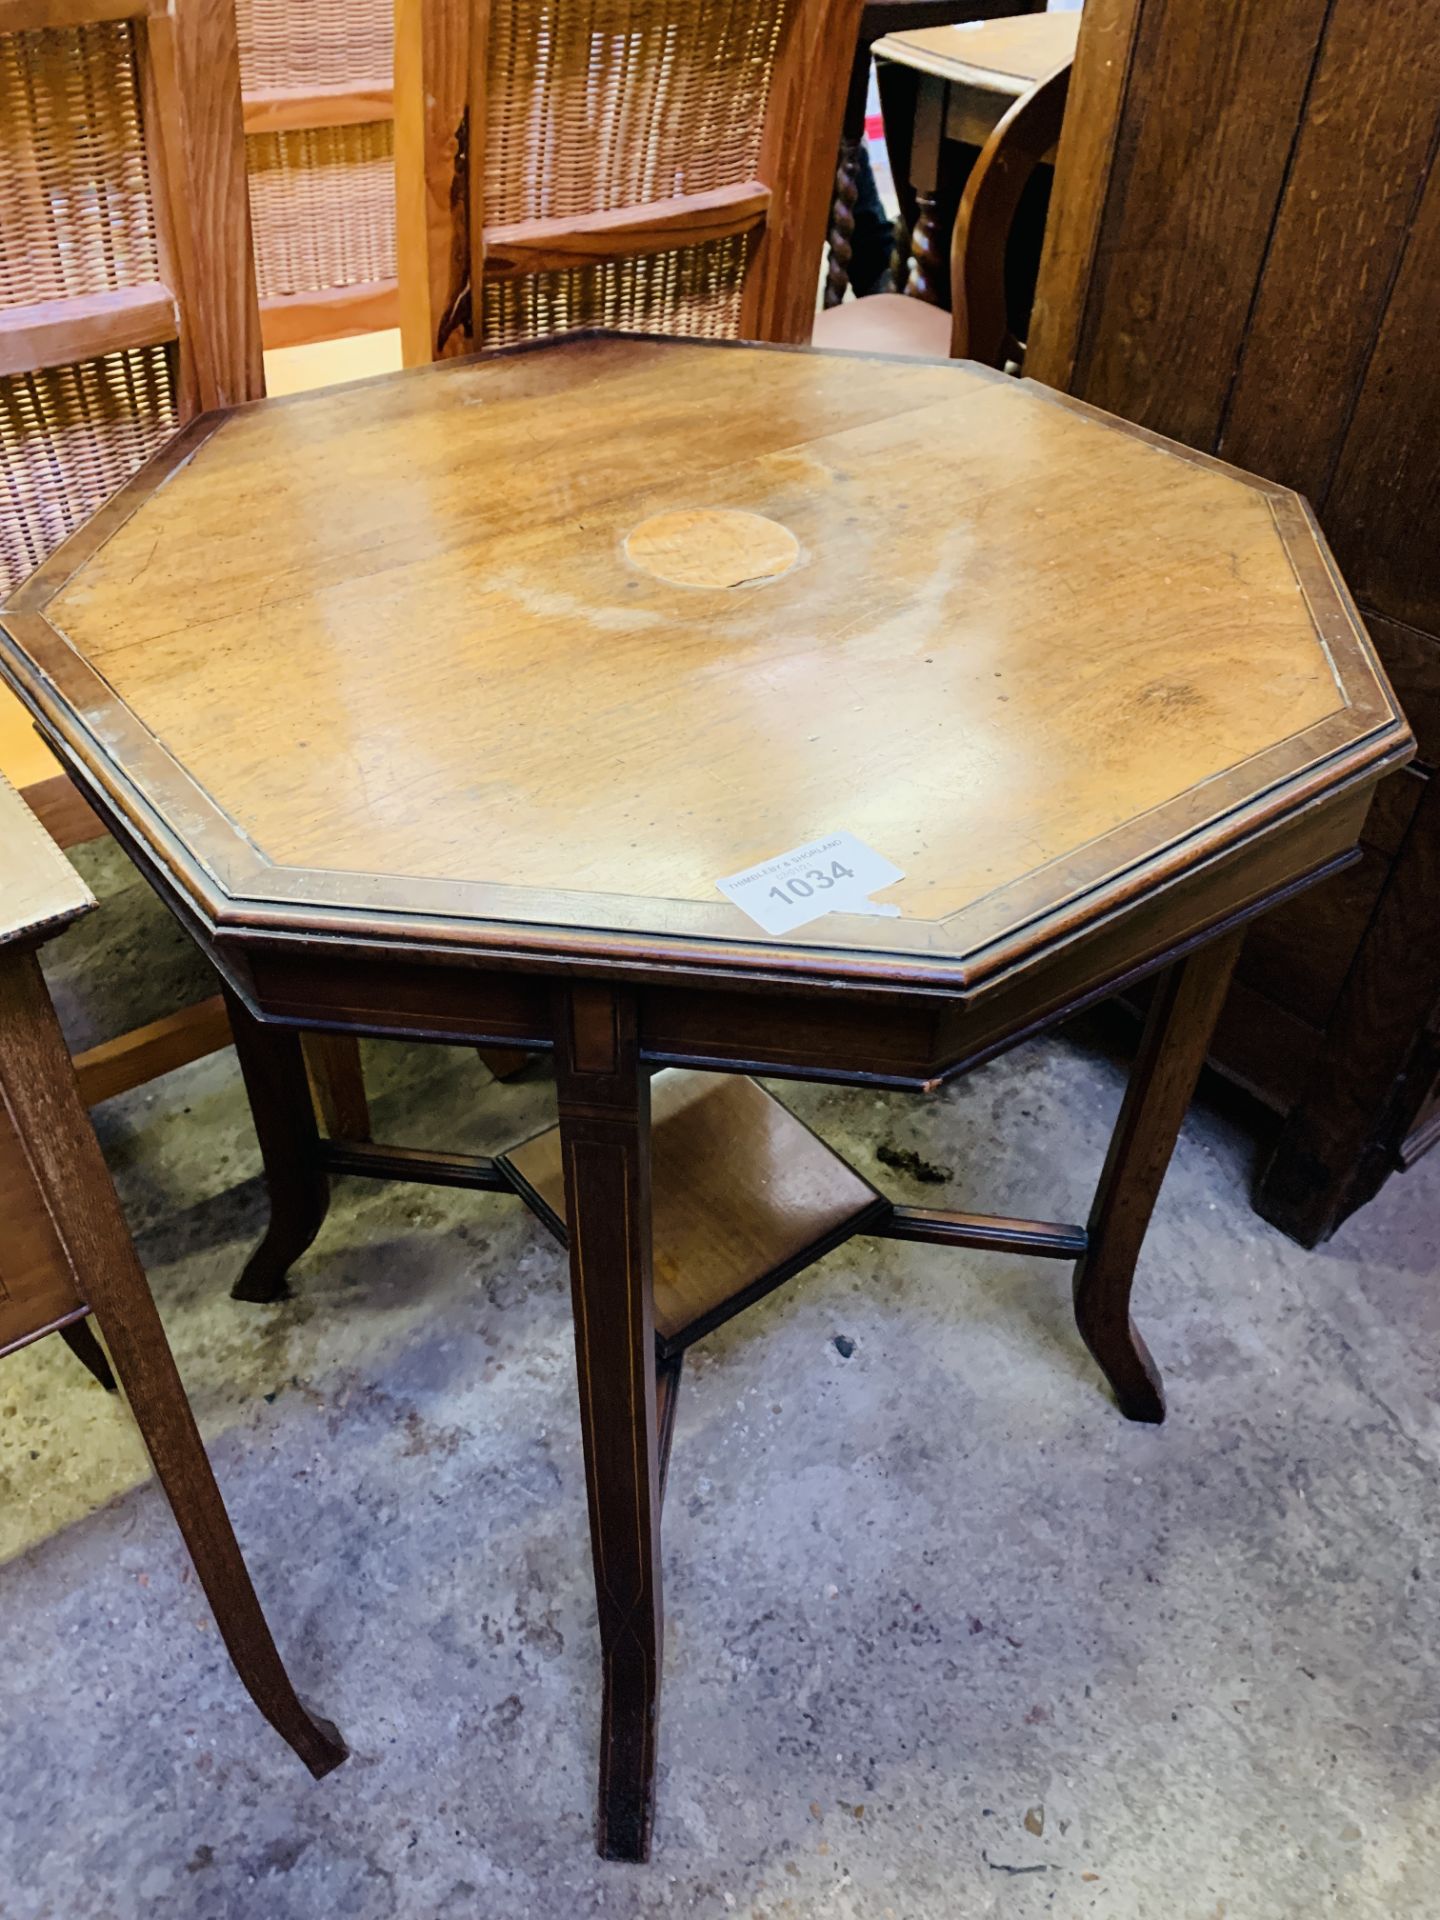 Mahogany octagonal top display table, together with a mahogany sewing box. - Image 3 of 5